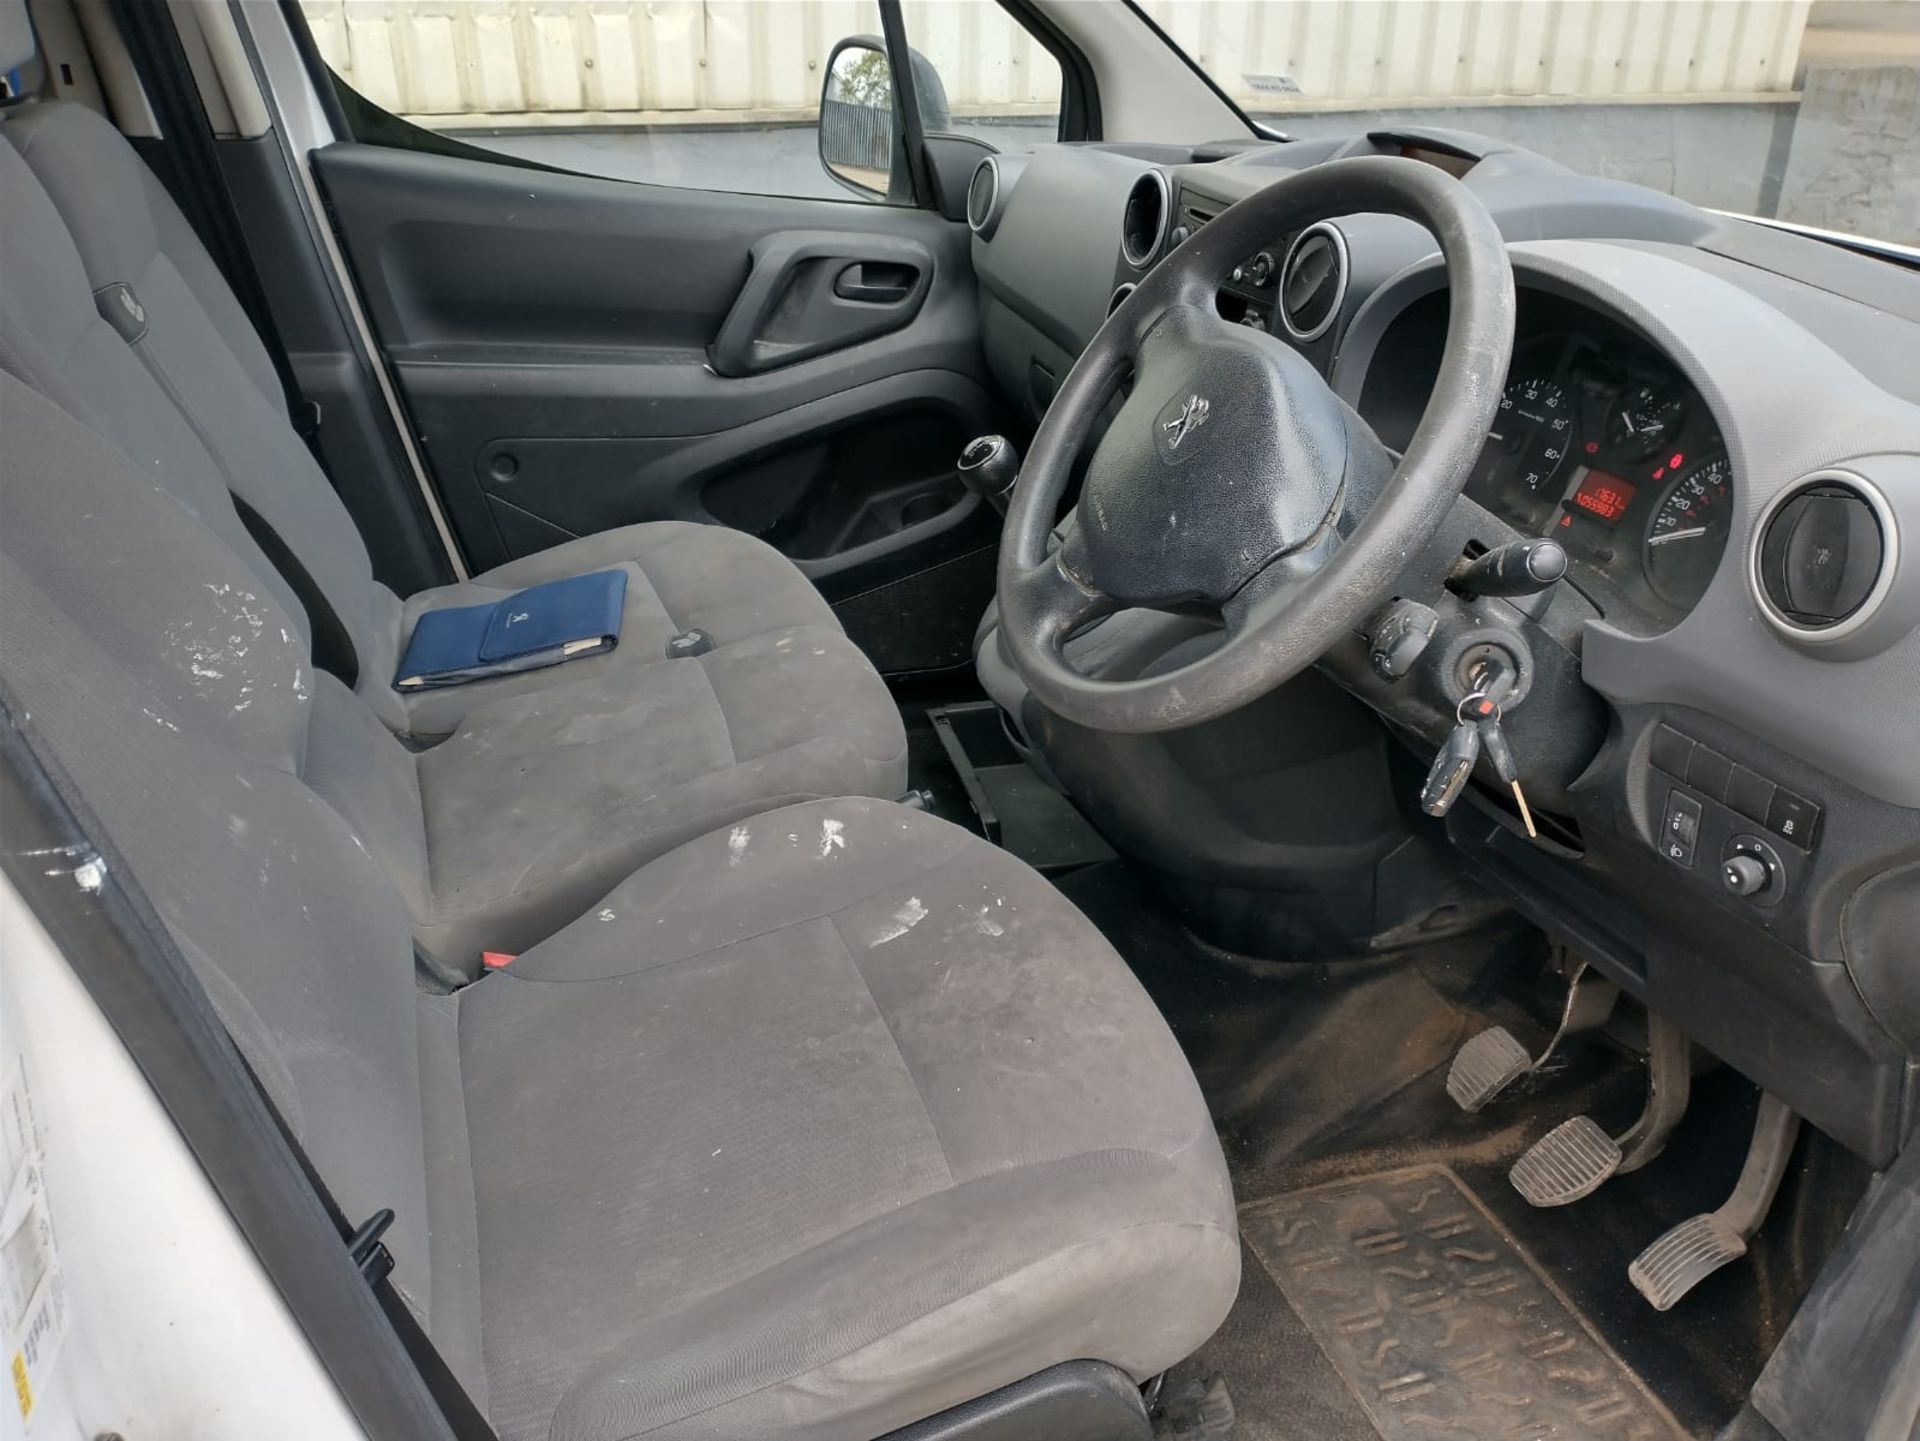 2015 Peugeot Partner 850 professional 1.6 HDI 3 Seater Panel Van - Image 9 of 15